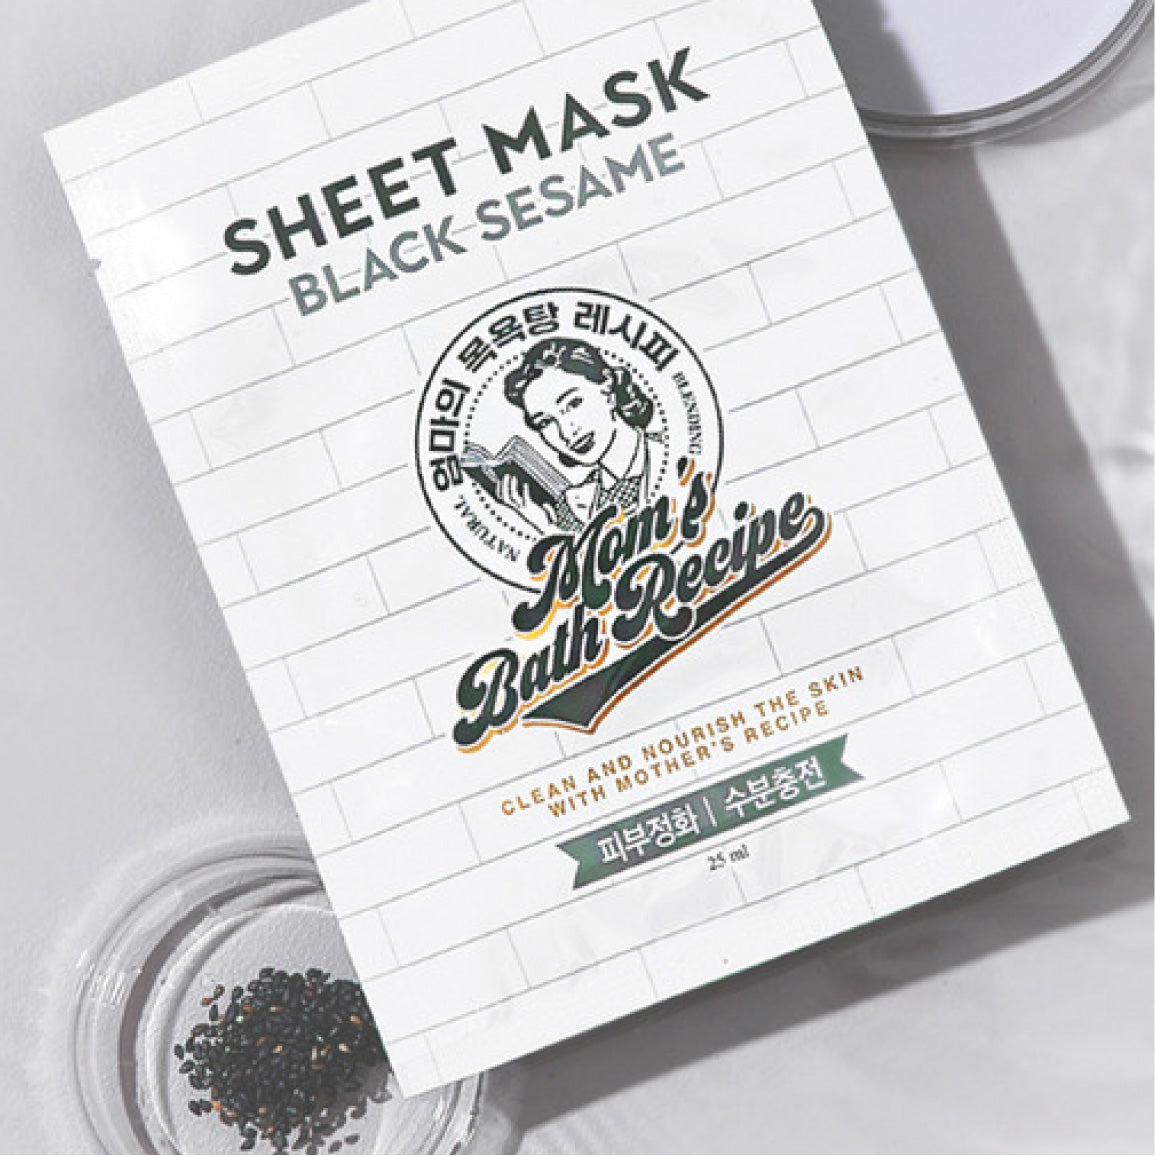 Mom's Bath - Black Sesame Sheet Mask - 1 Sheet 